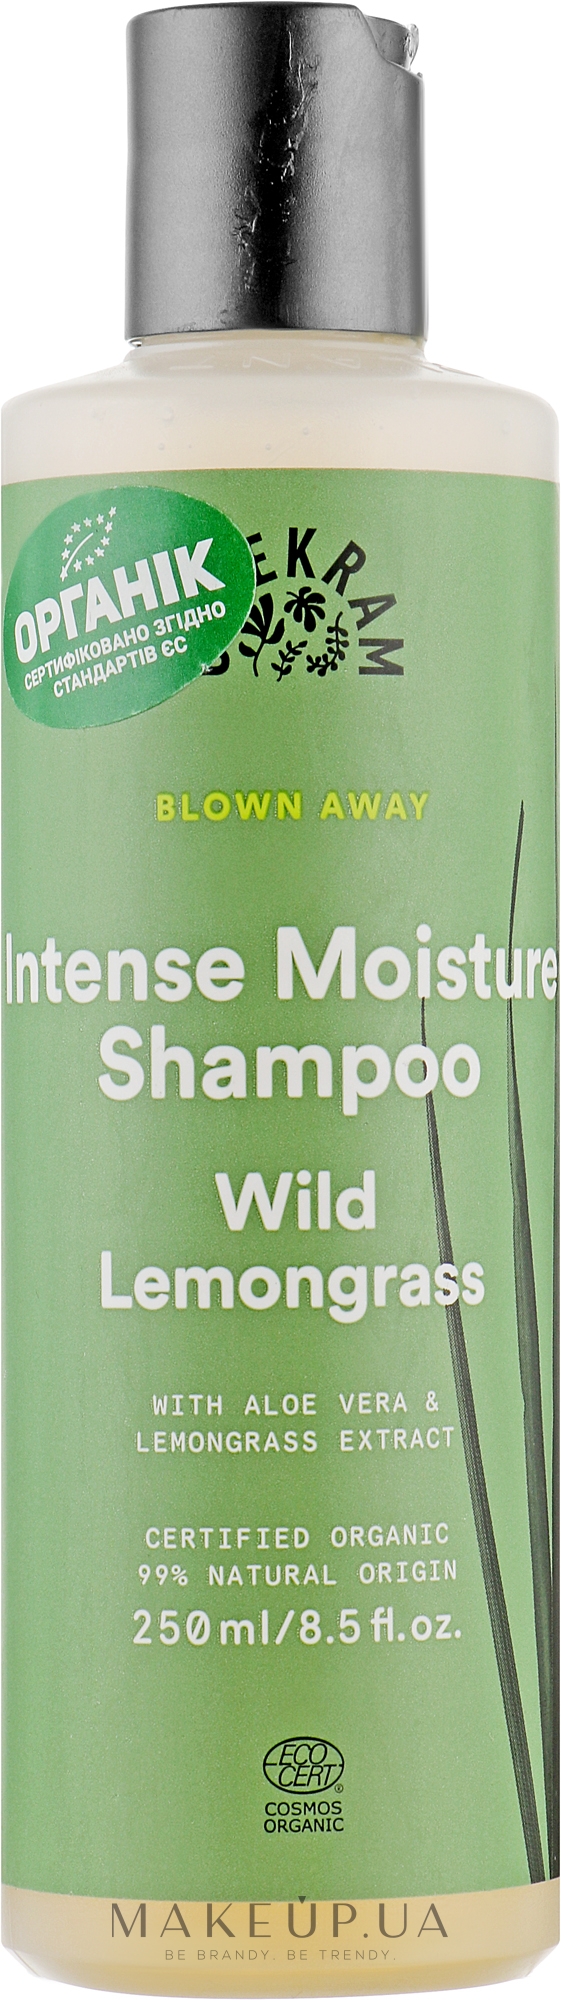 Органічний шампунь для волосся "Дикий лемонграс" - Urtekram Wild lemongrass Intense Moisture Shampoo — фото 250ml